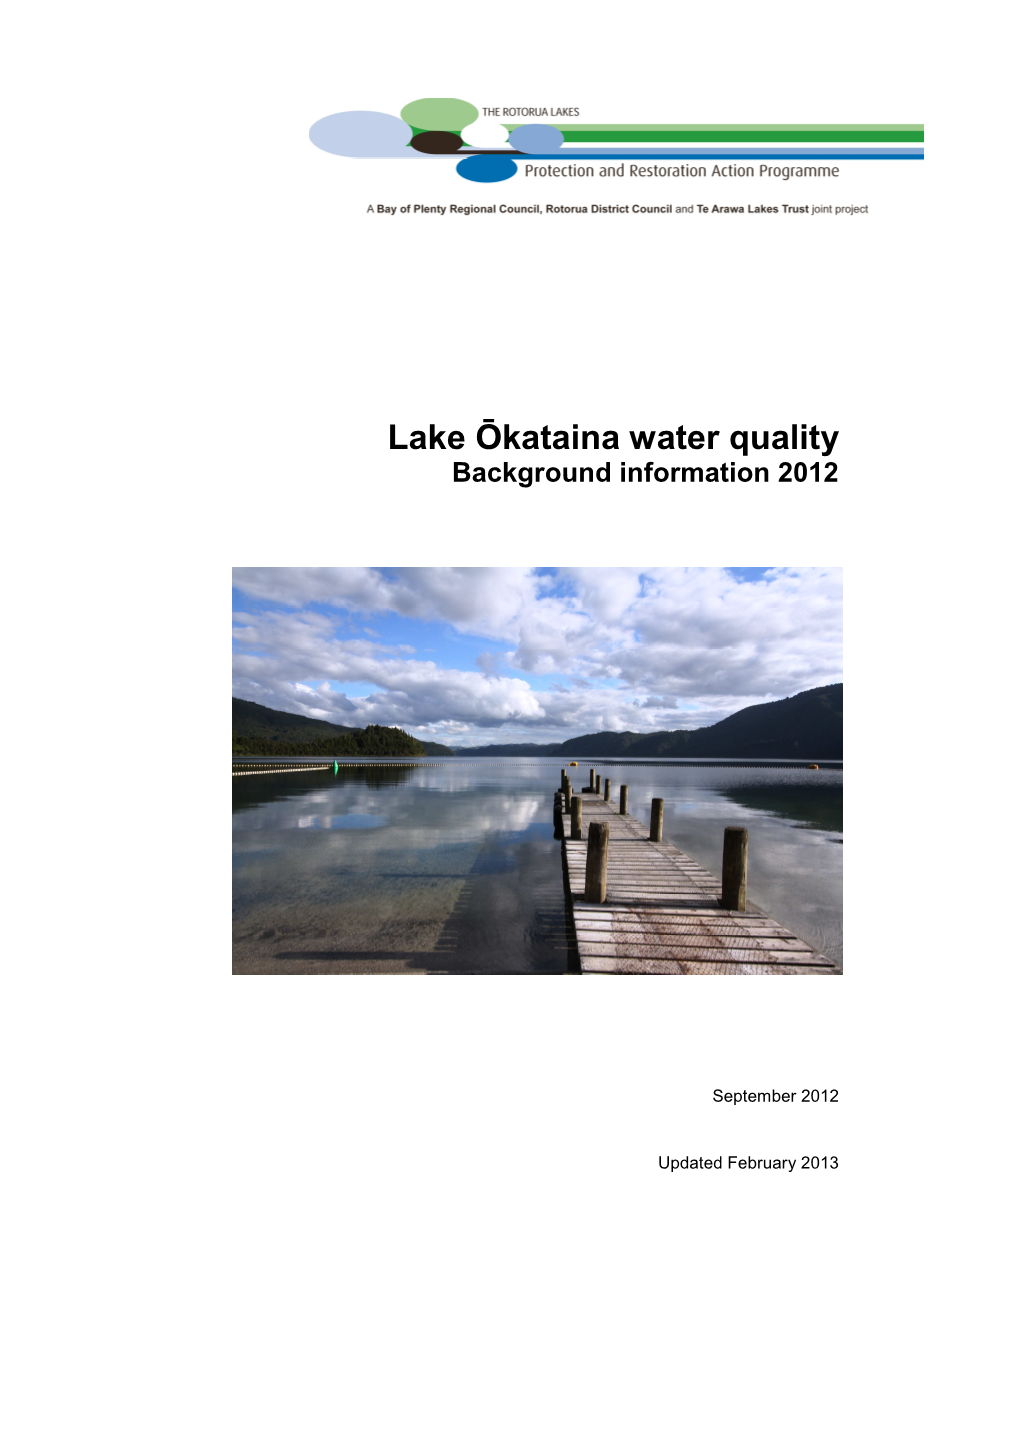 Lake Okataina Water Quality Background Information 2012 Updated February 2013